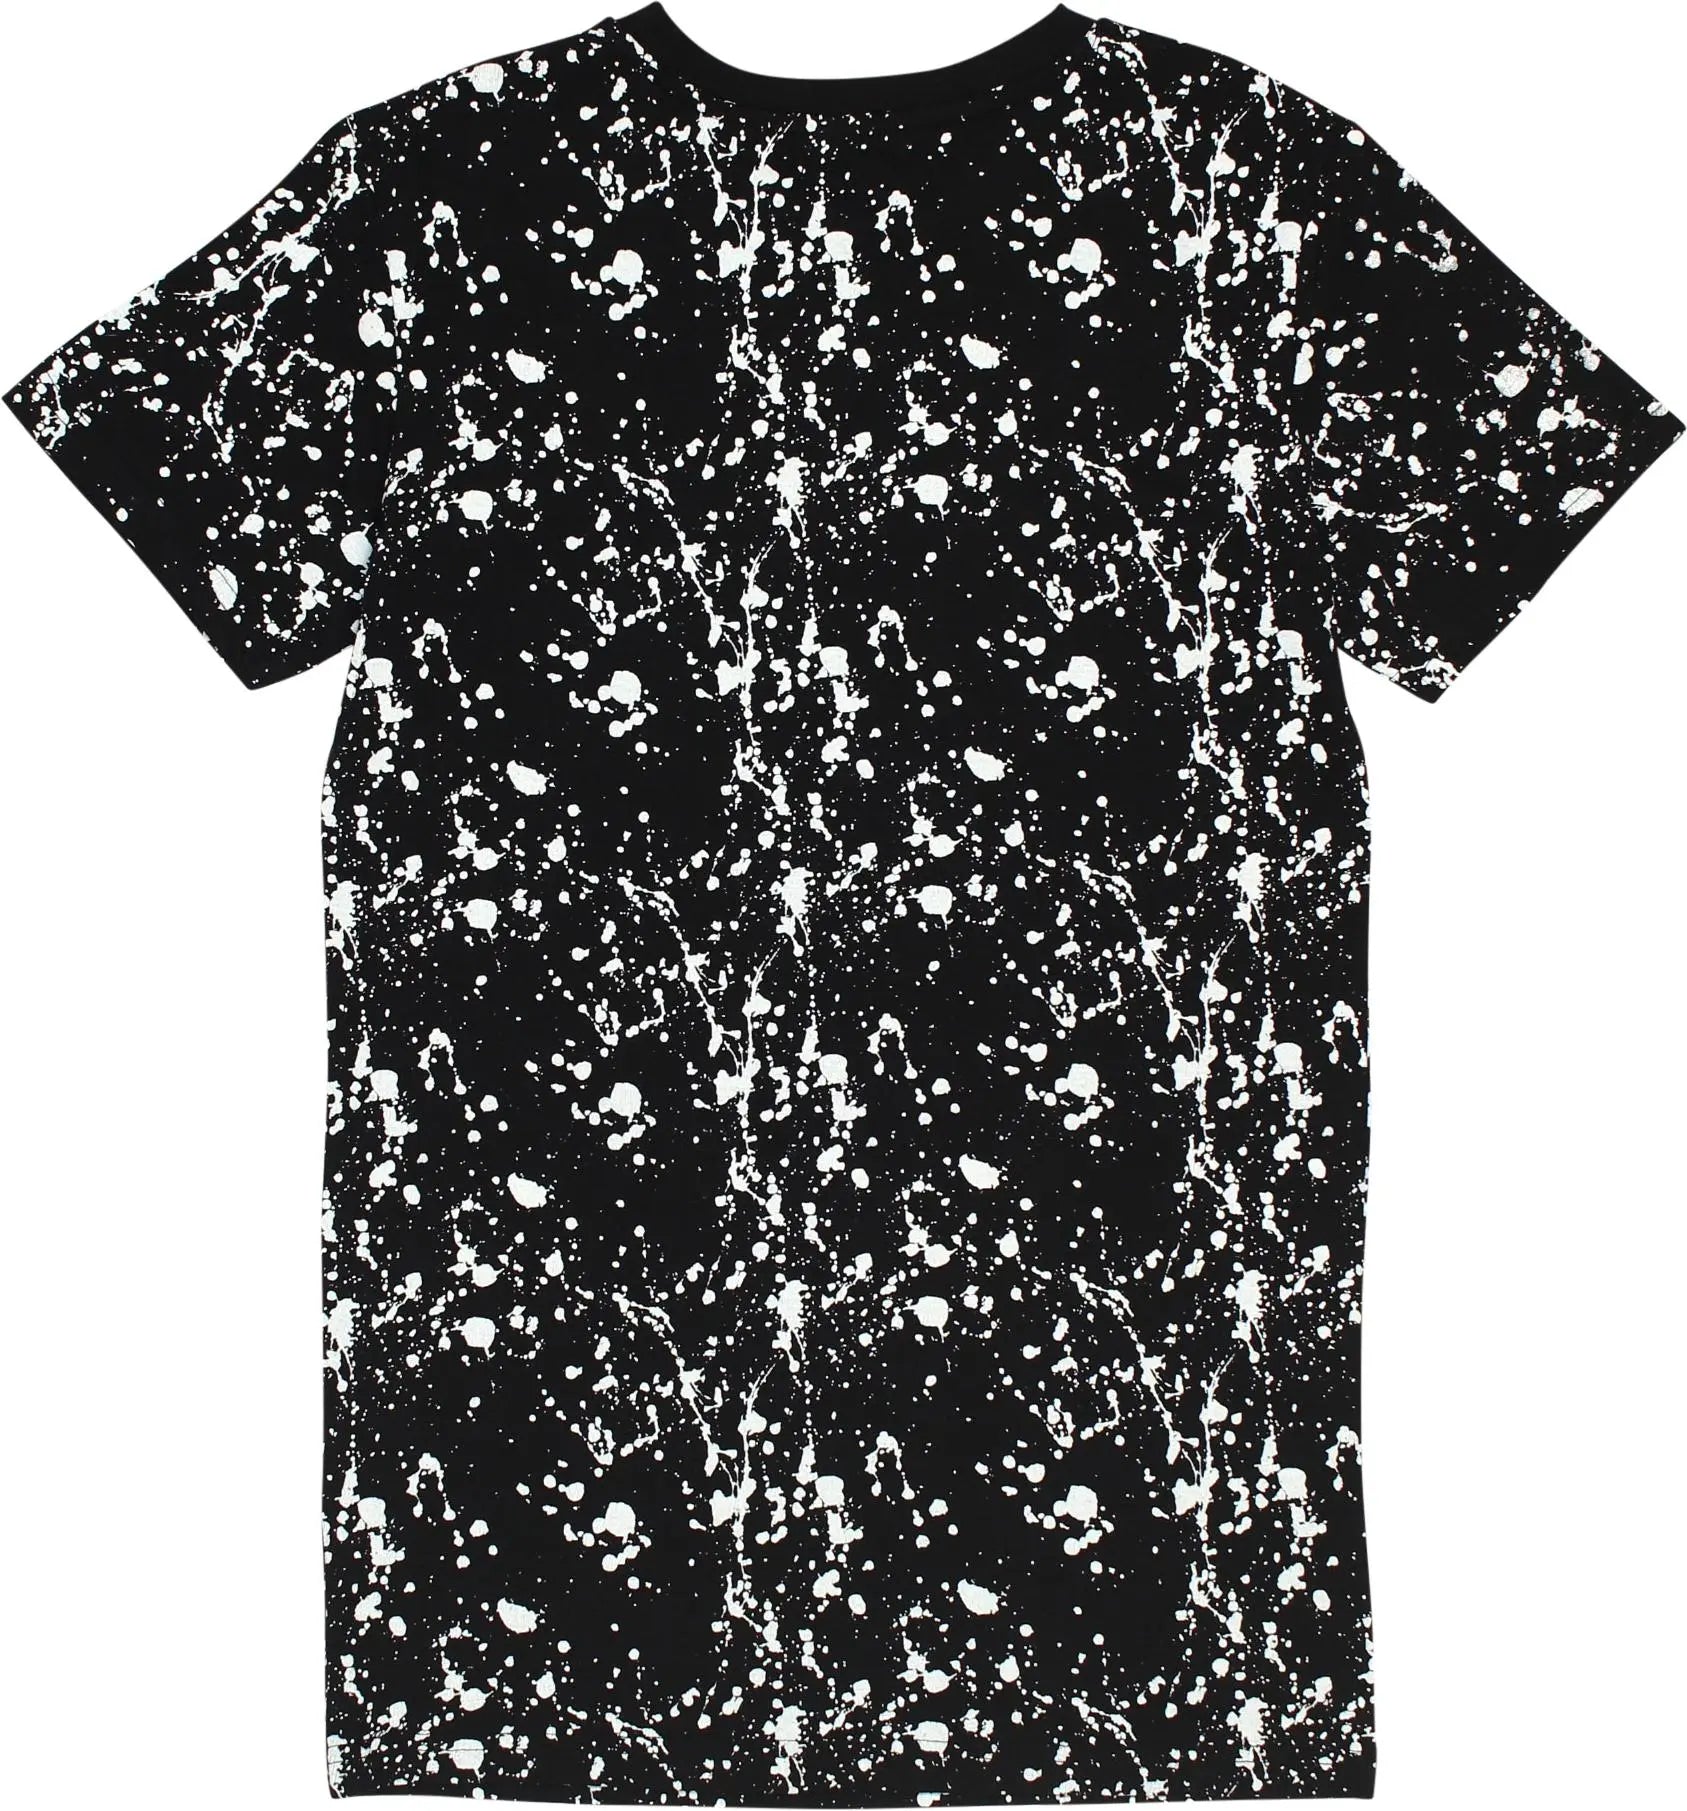 Zeeman - Black T-shirt- ThriftTale.com - Vintage and second handclothing